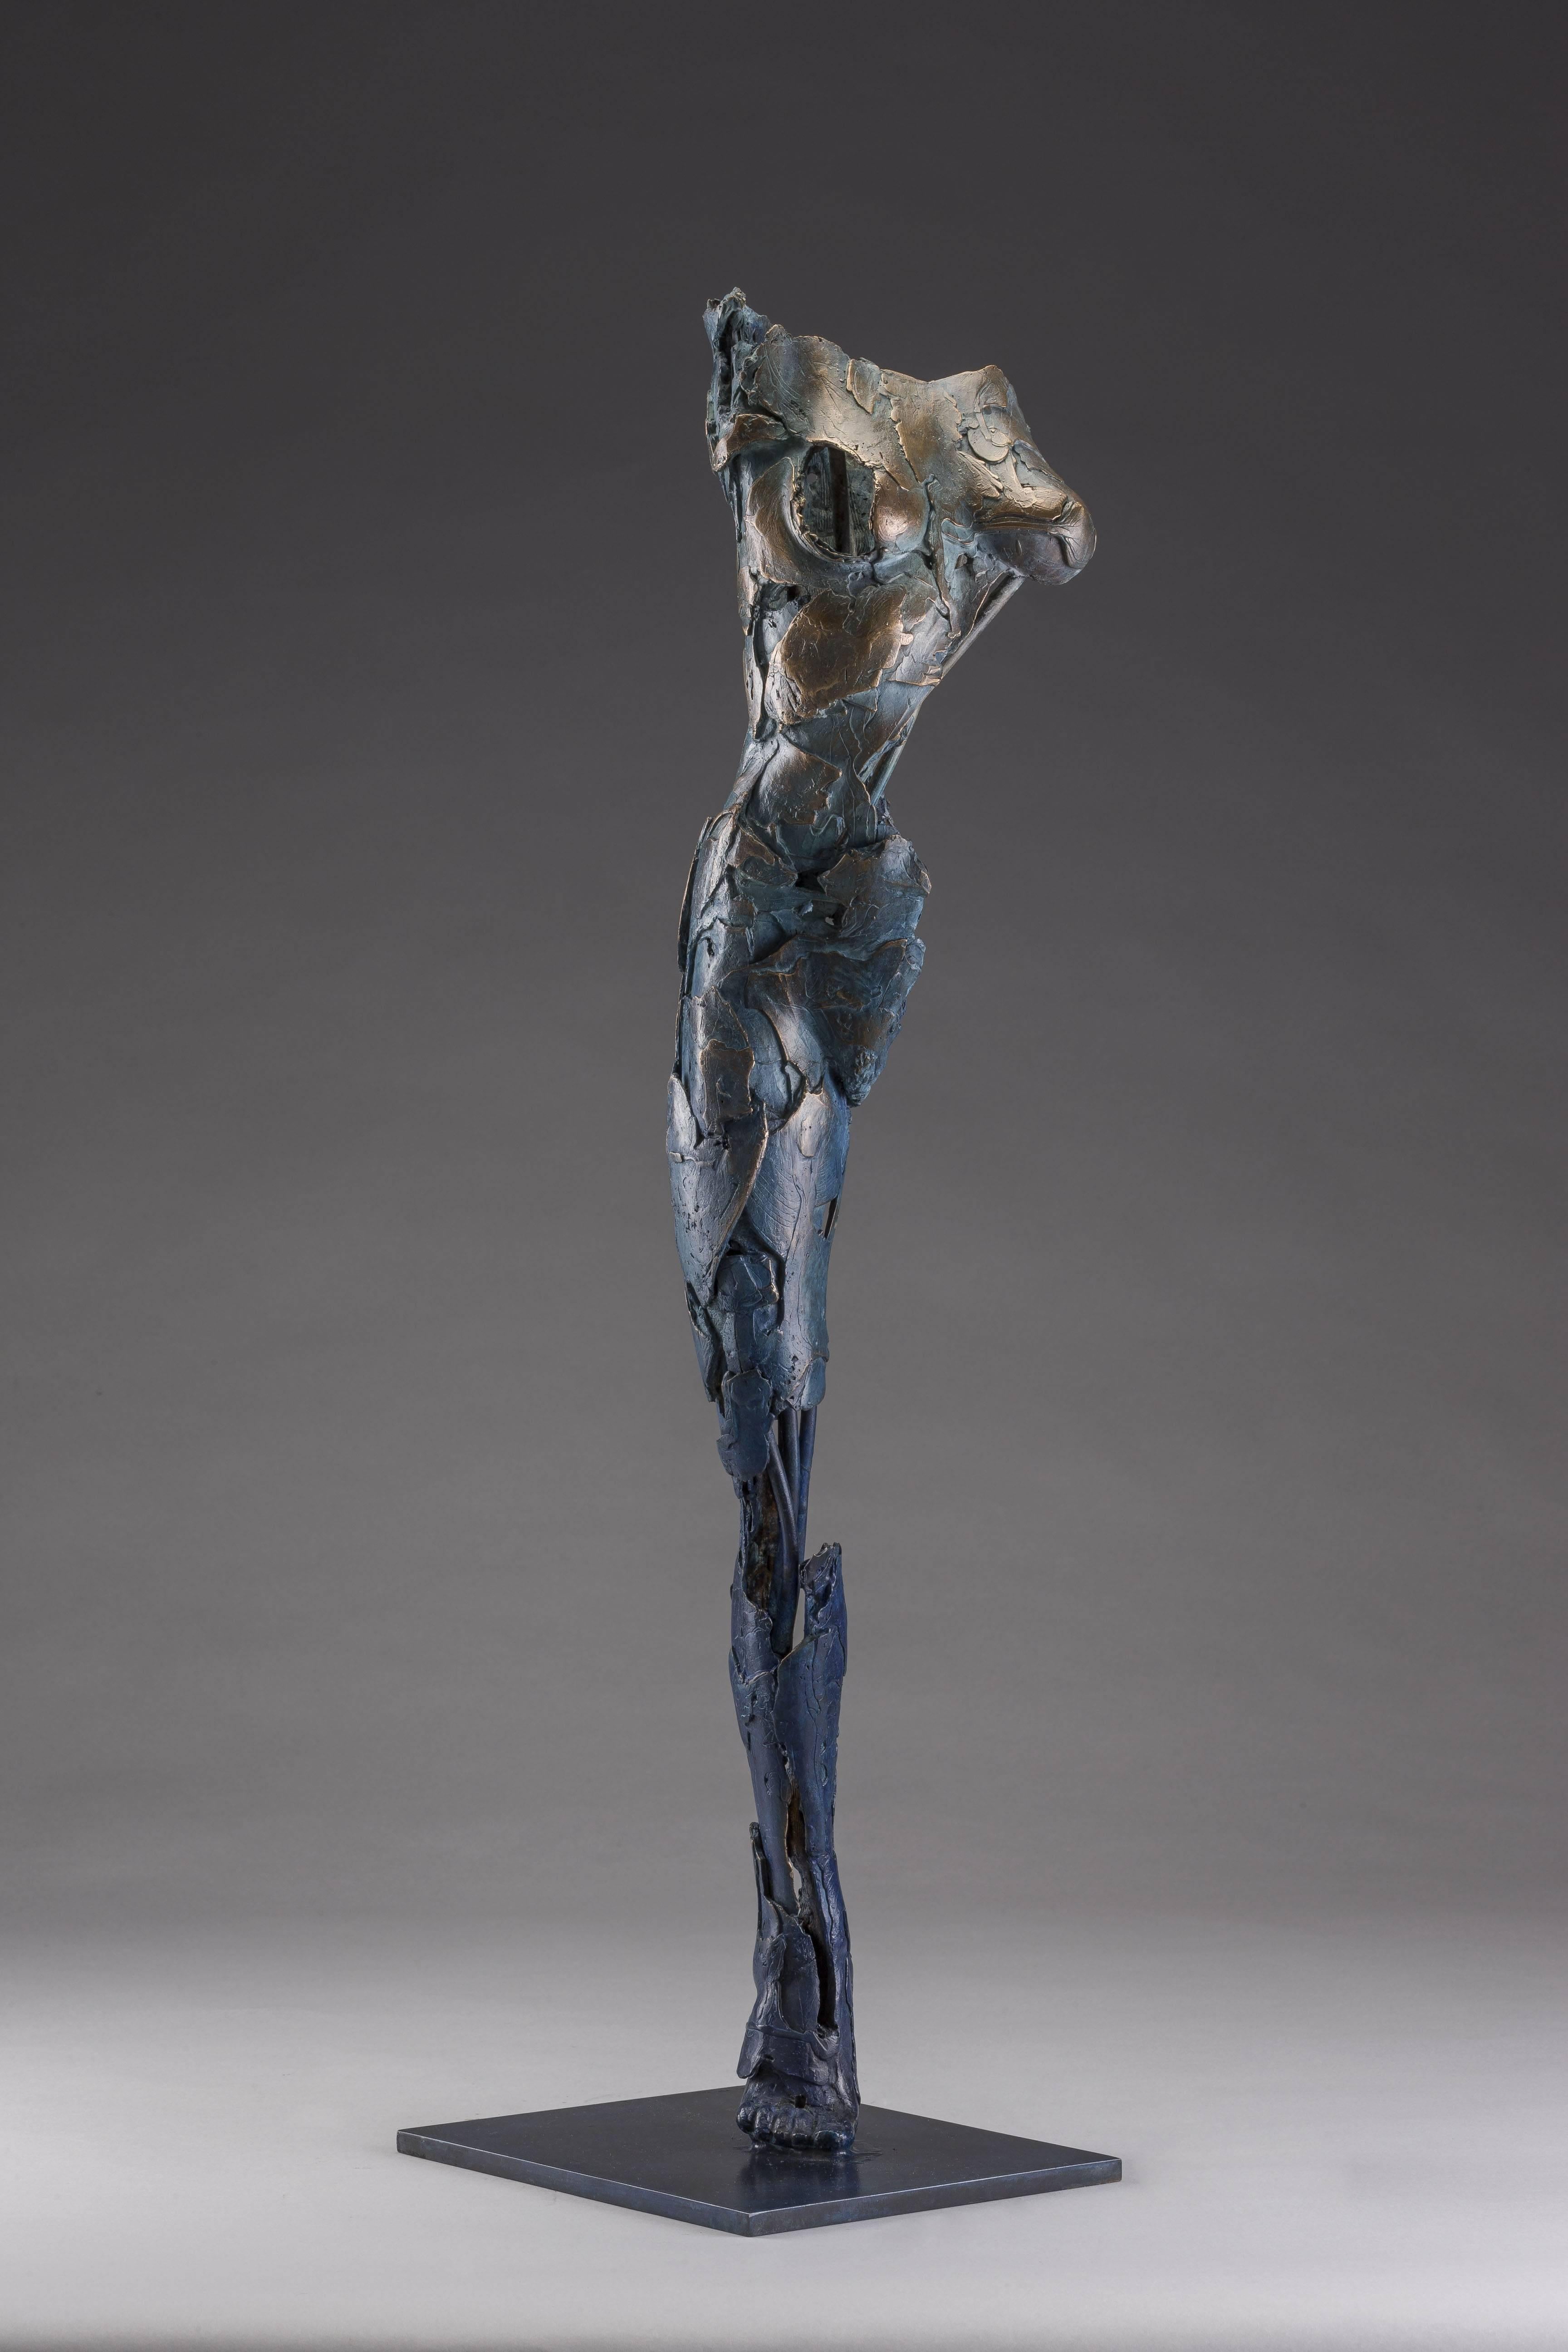 Blake Ward Figurative Sculpture - Ushabti Hetheru (Goddess of Creation)